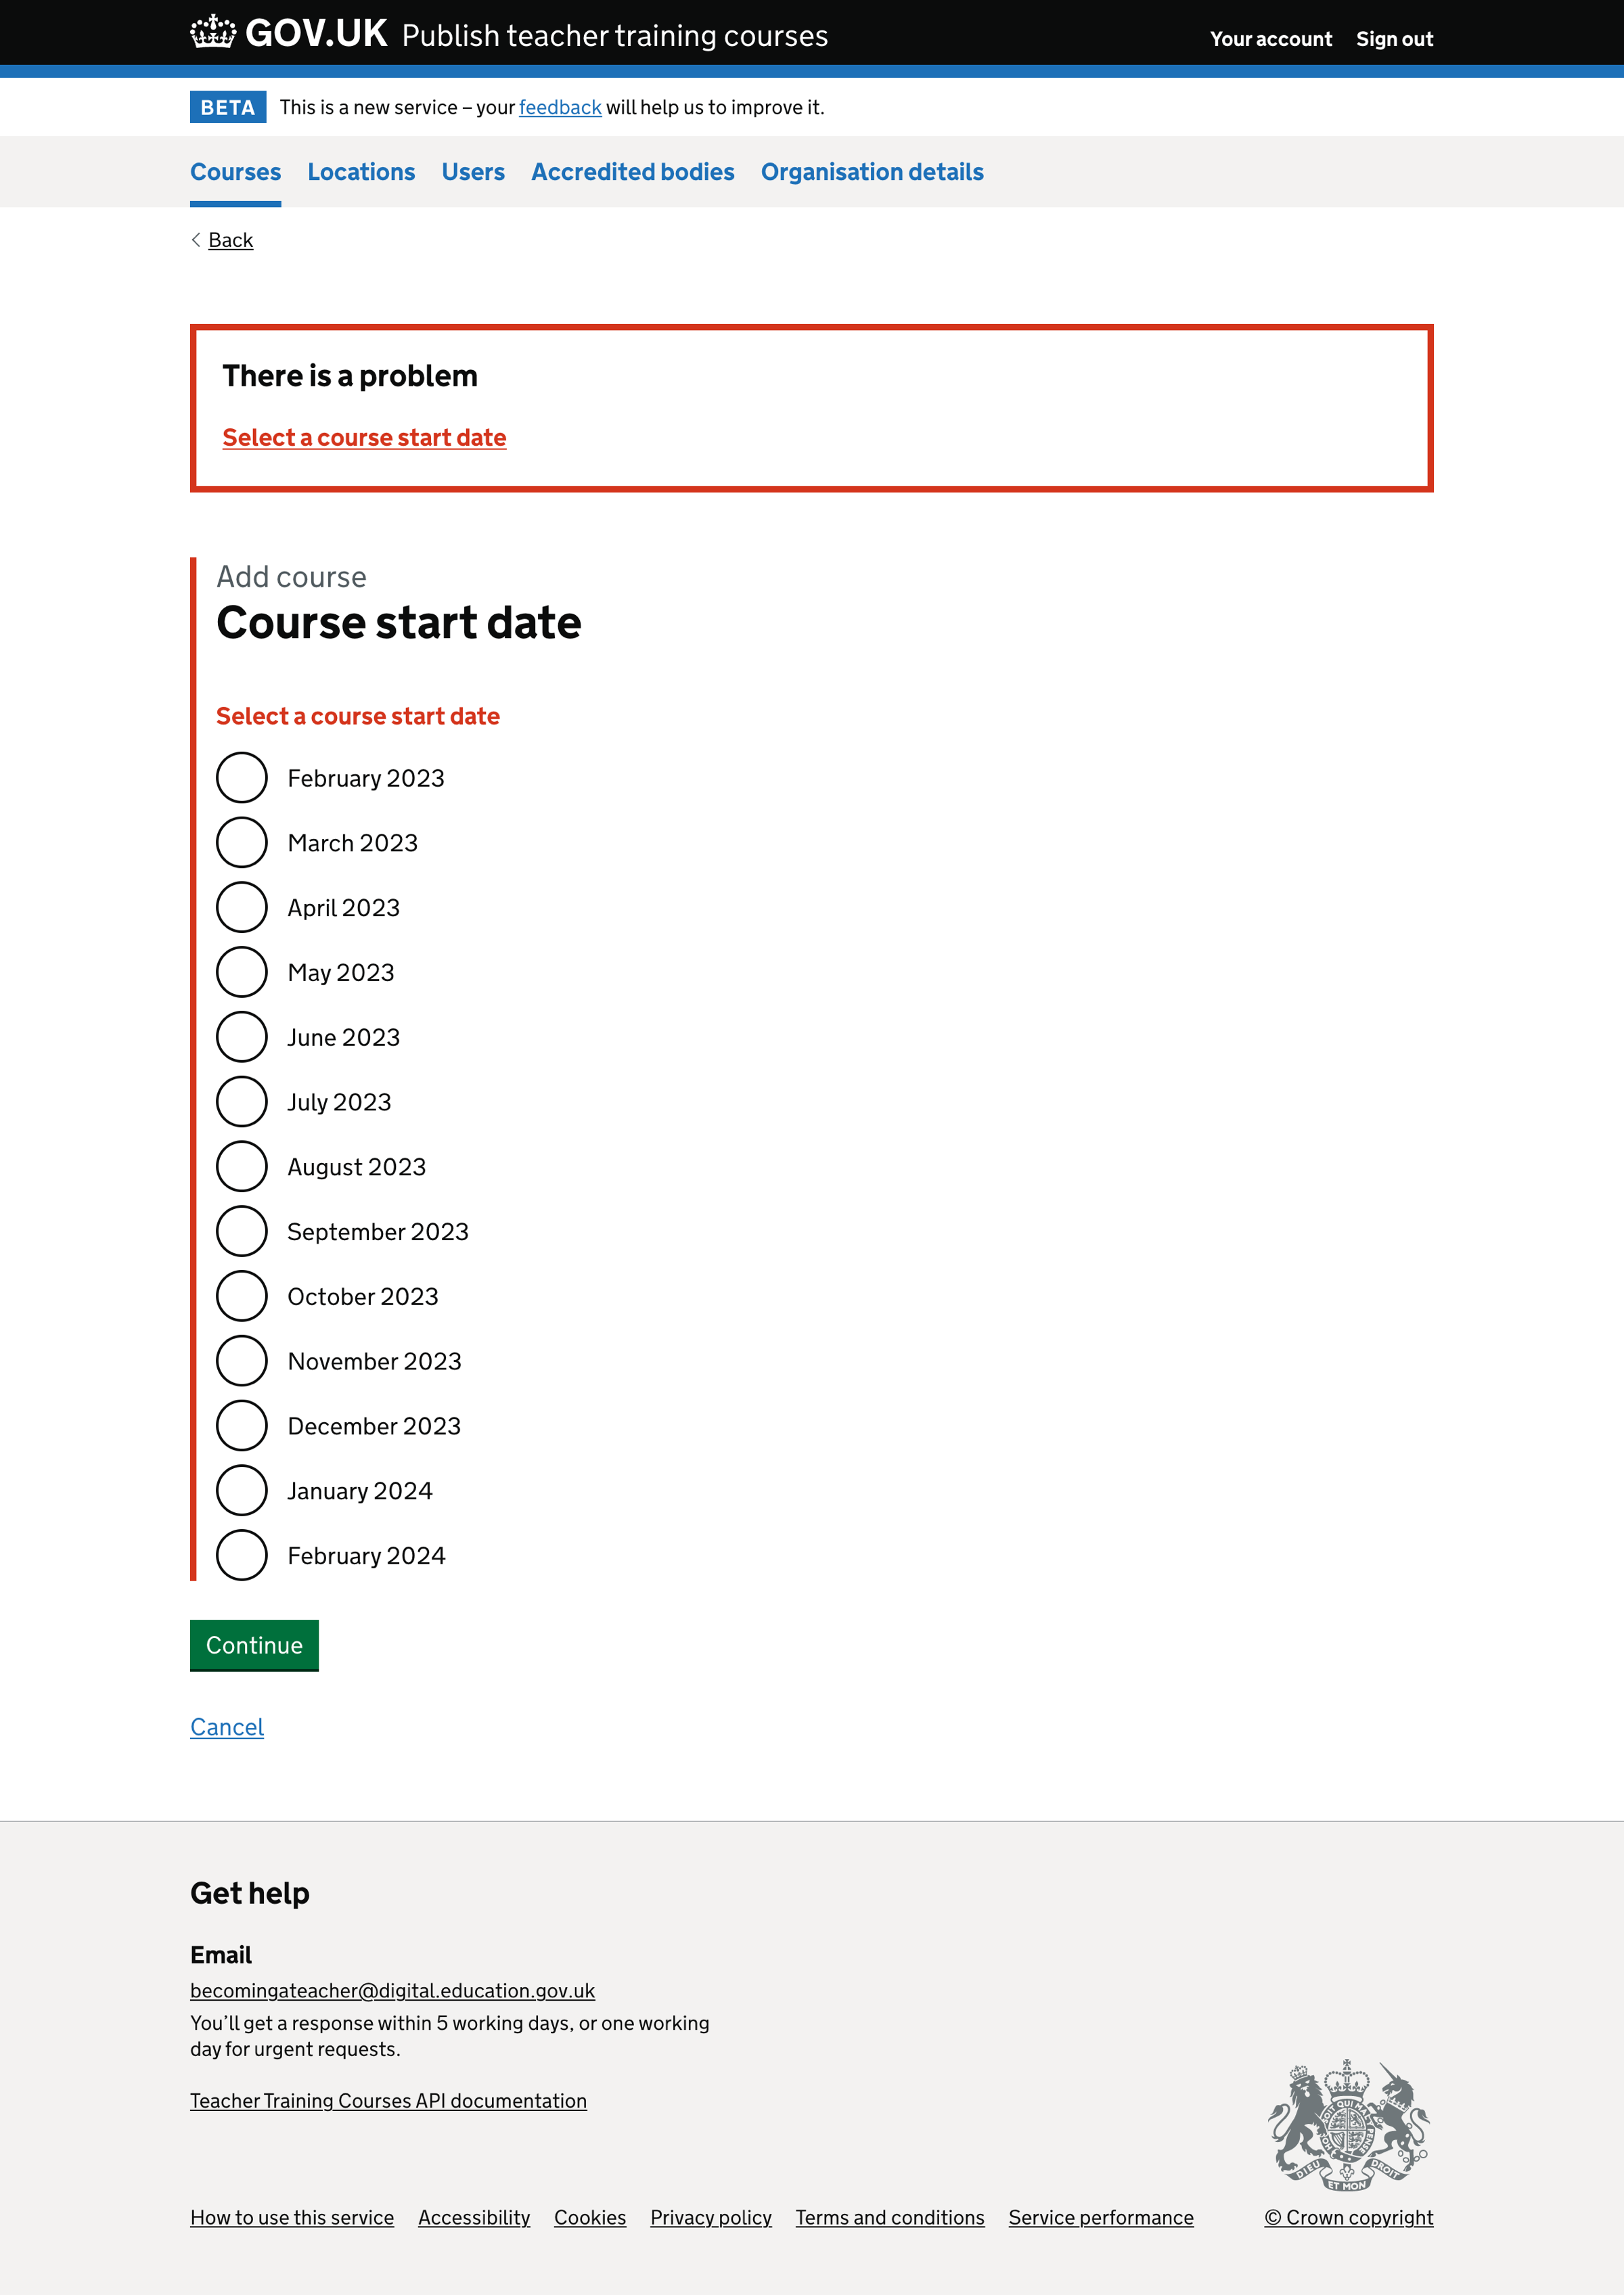 Course start date error message